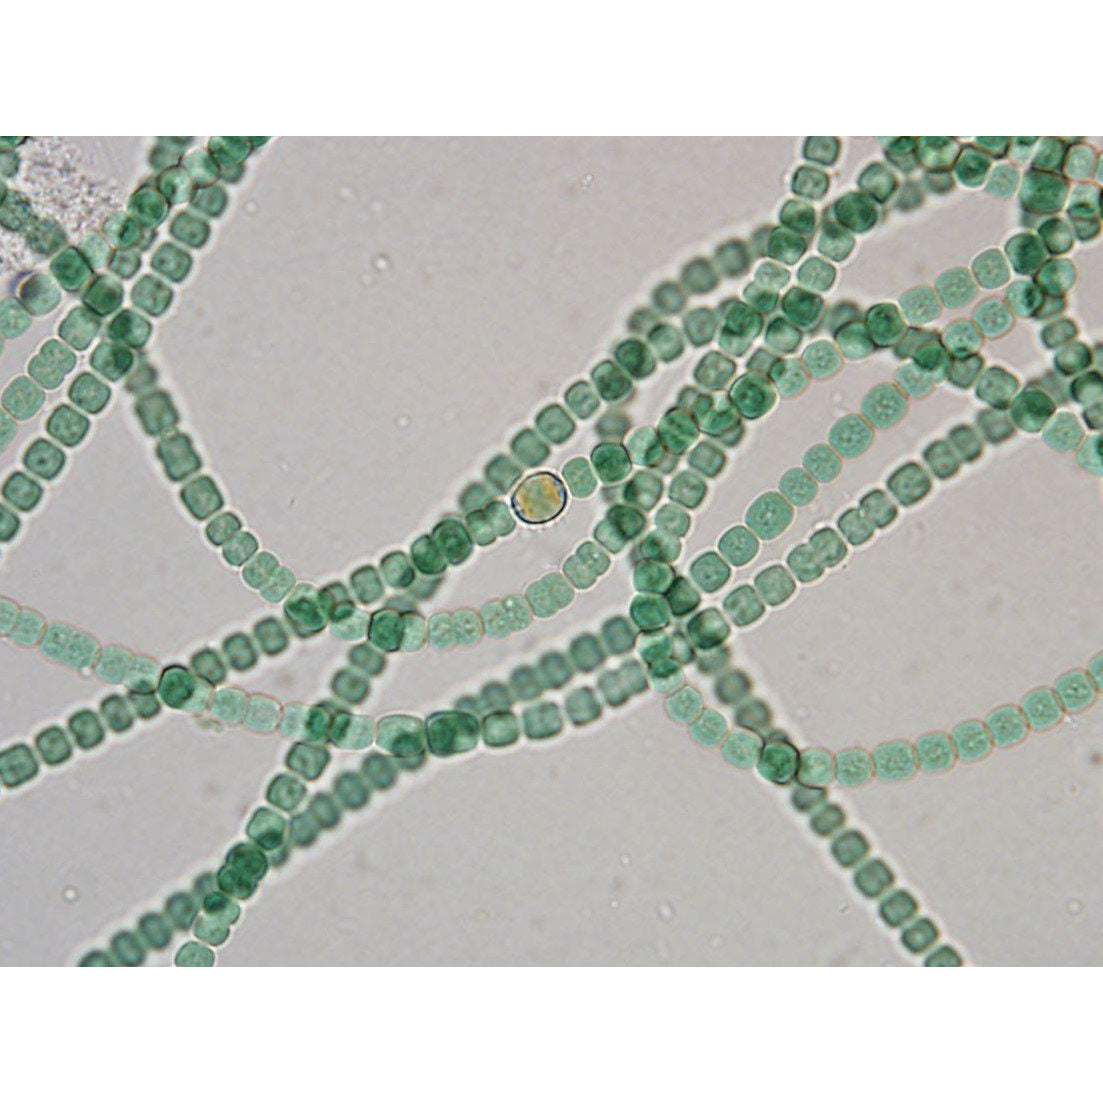 Algae Research Supply: Algae Culture Kit for Anabaena variabilis